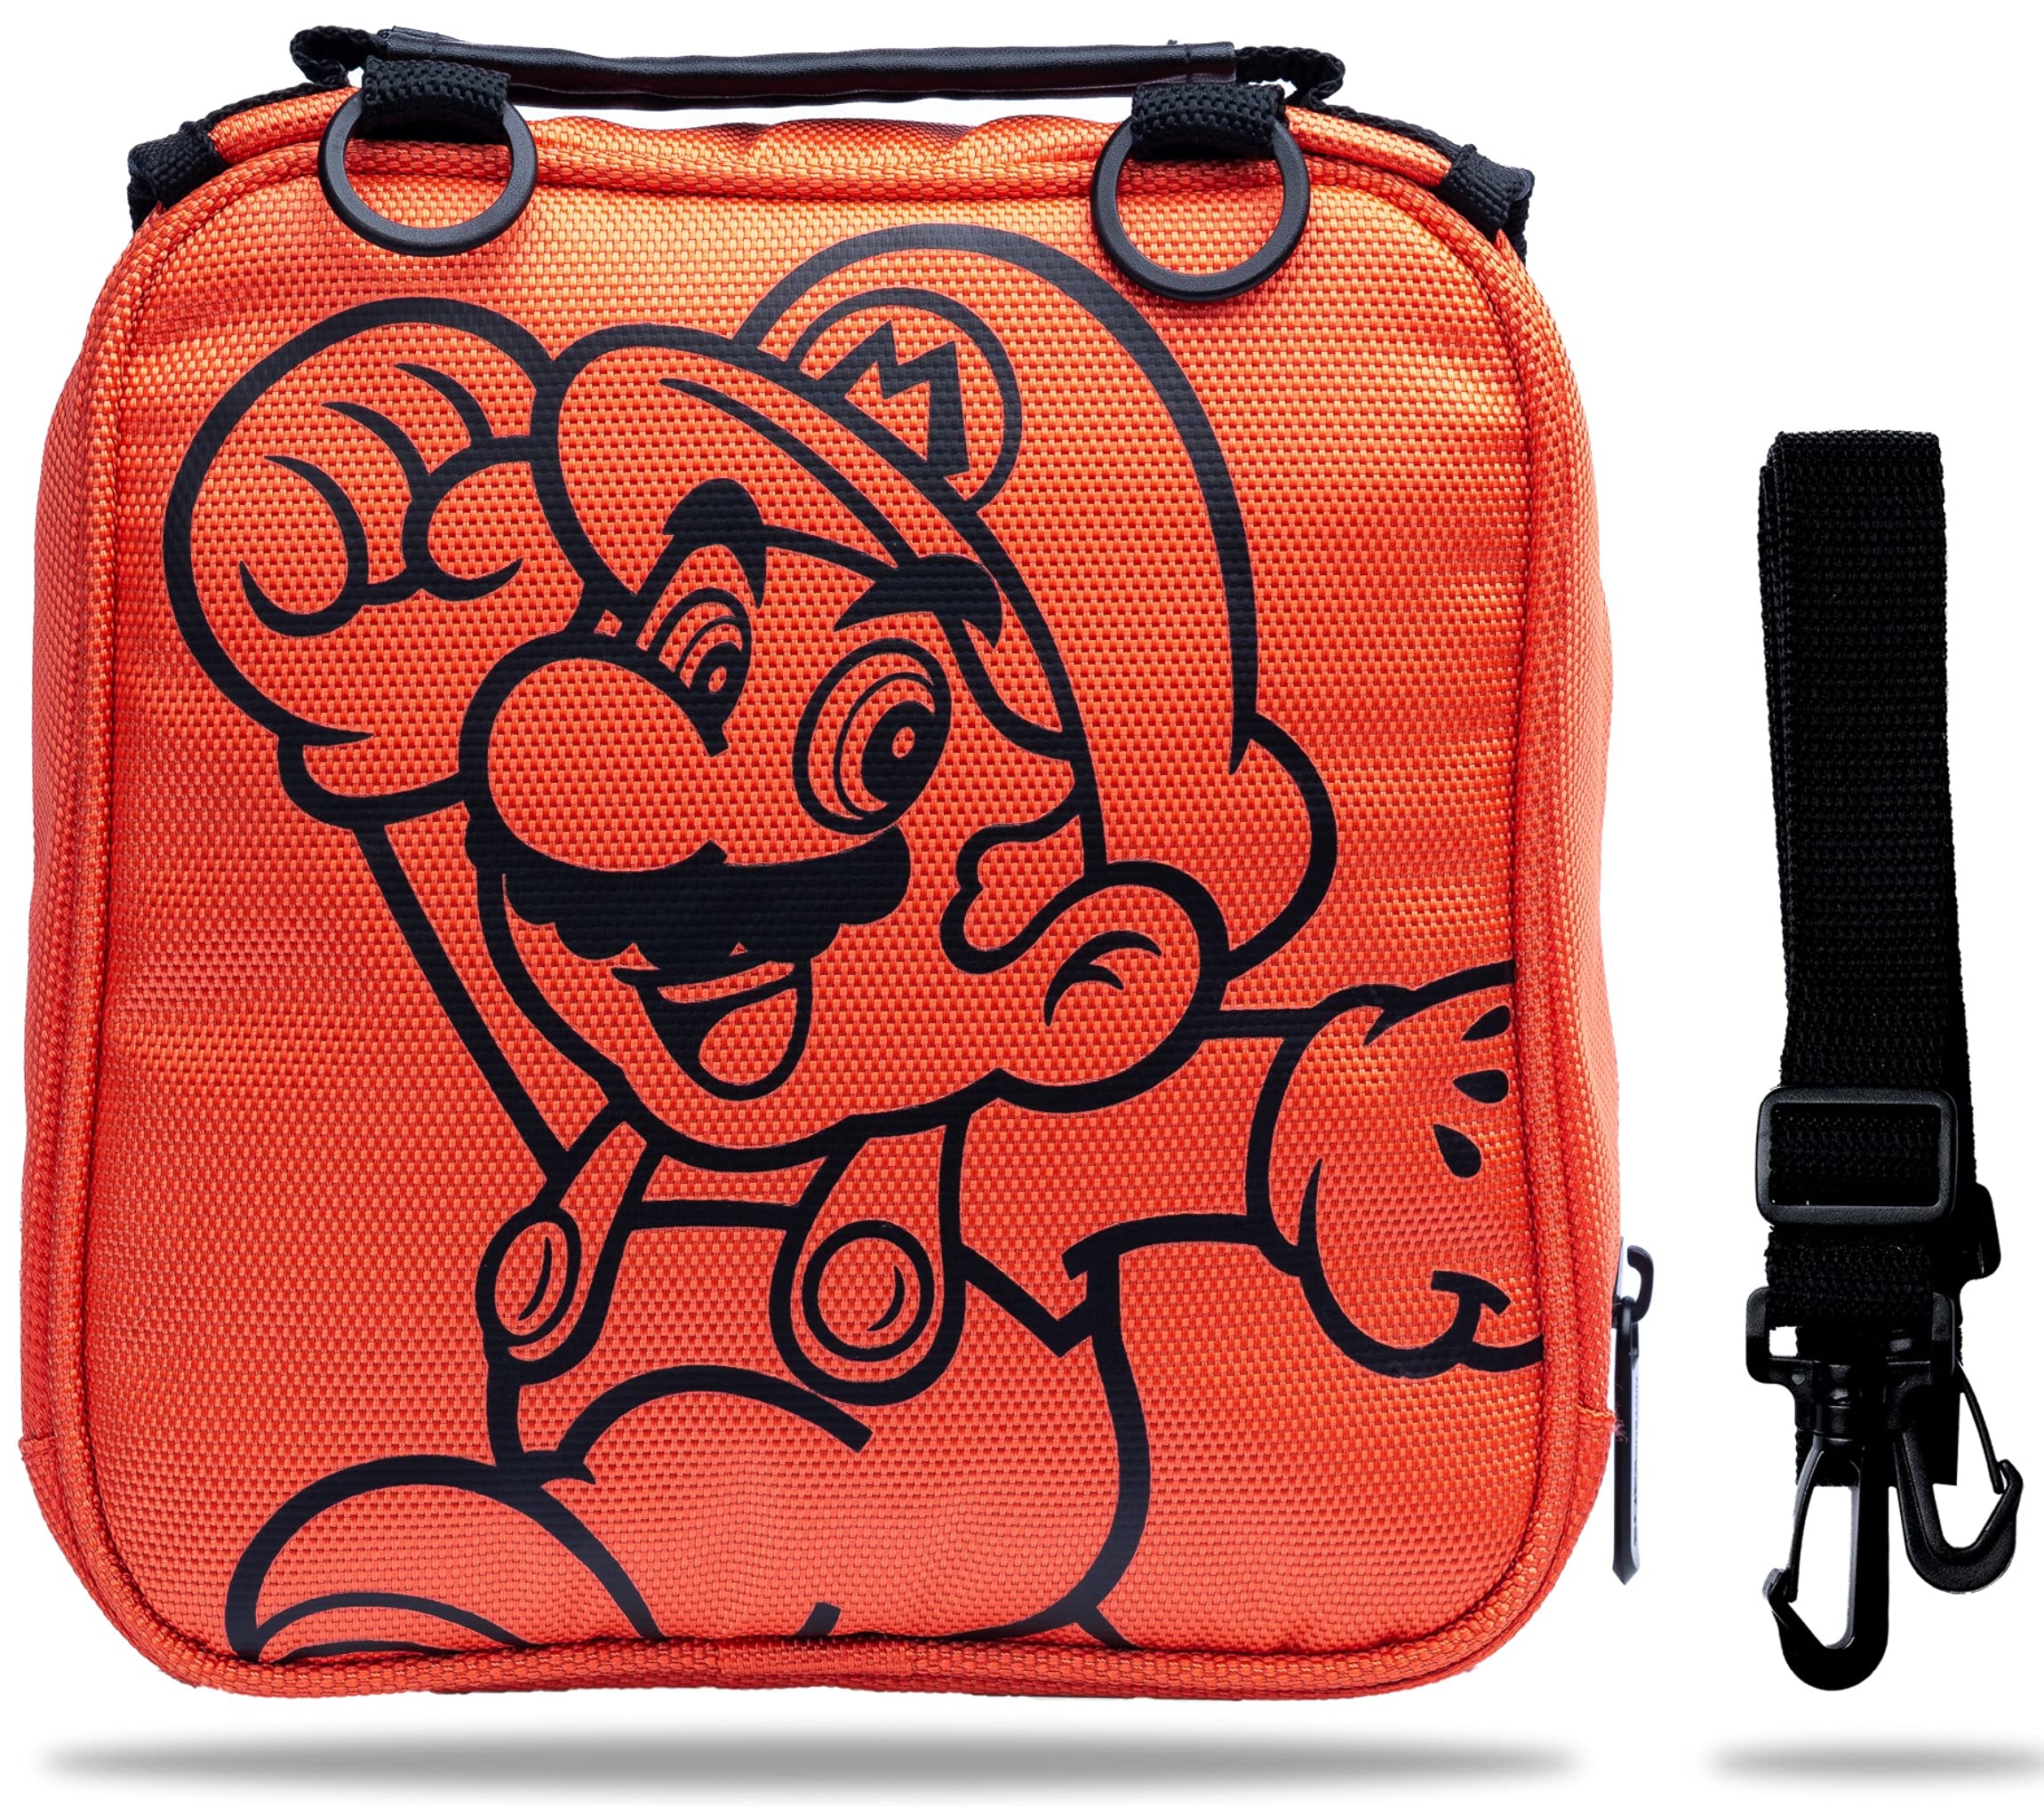 Universal Transporter Super Mario Case for 2DS, 3DS, 3DS XL, DS, DS XL